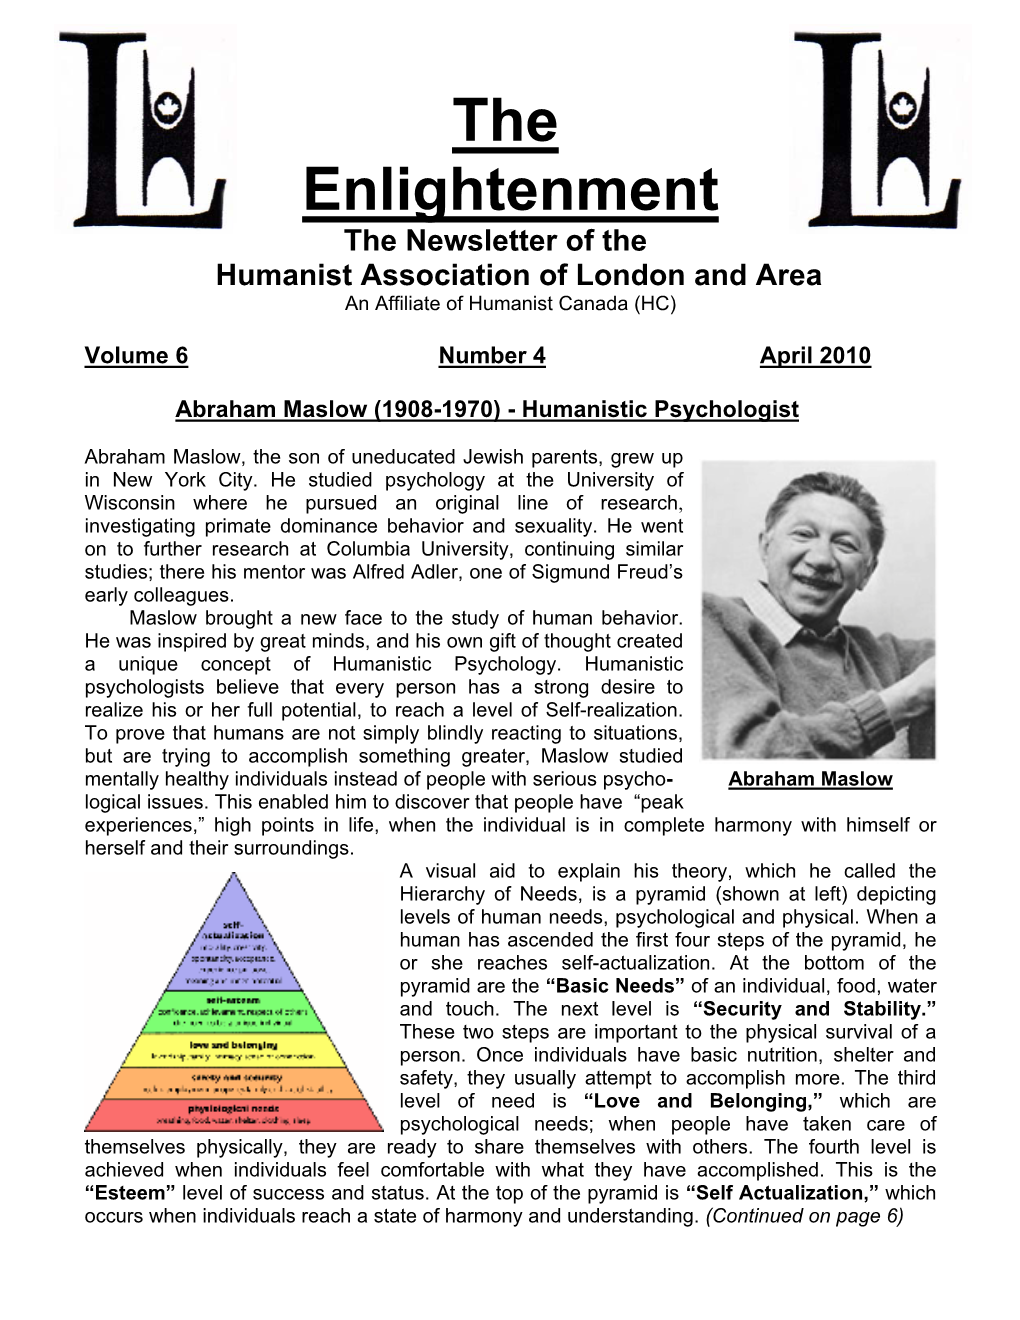 The Enlightenment, April 2010